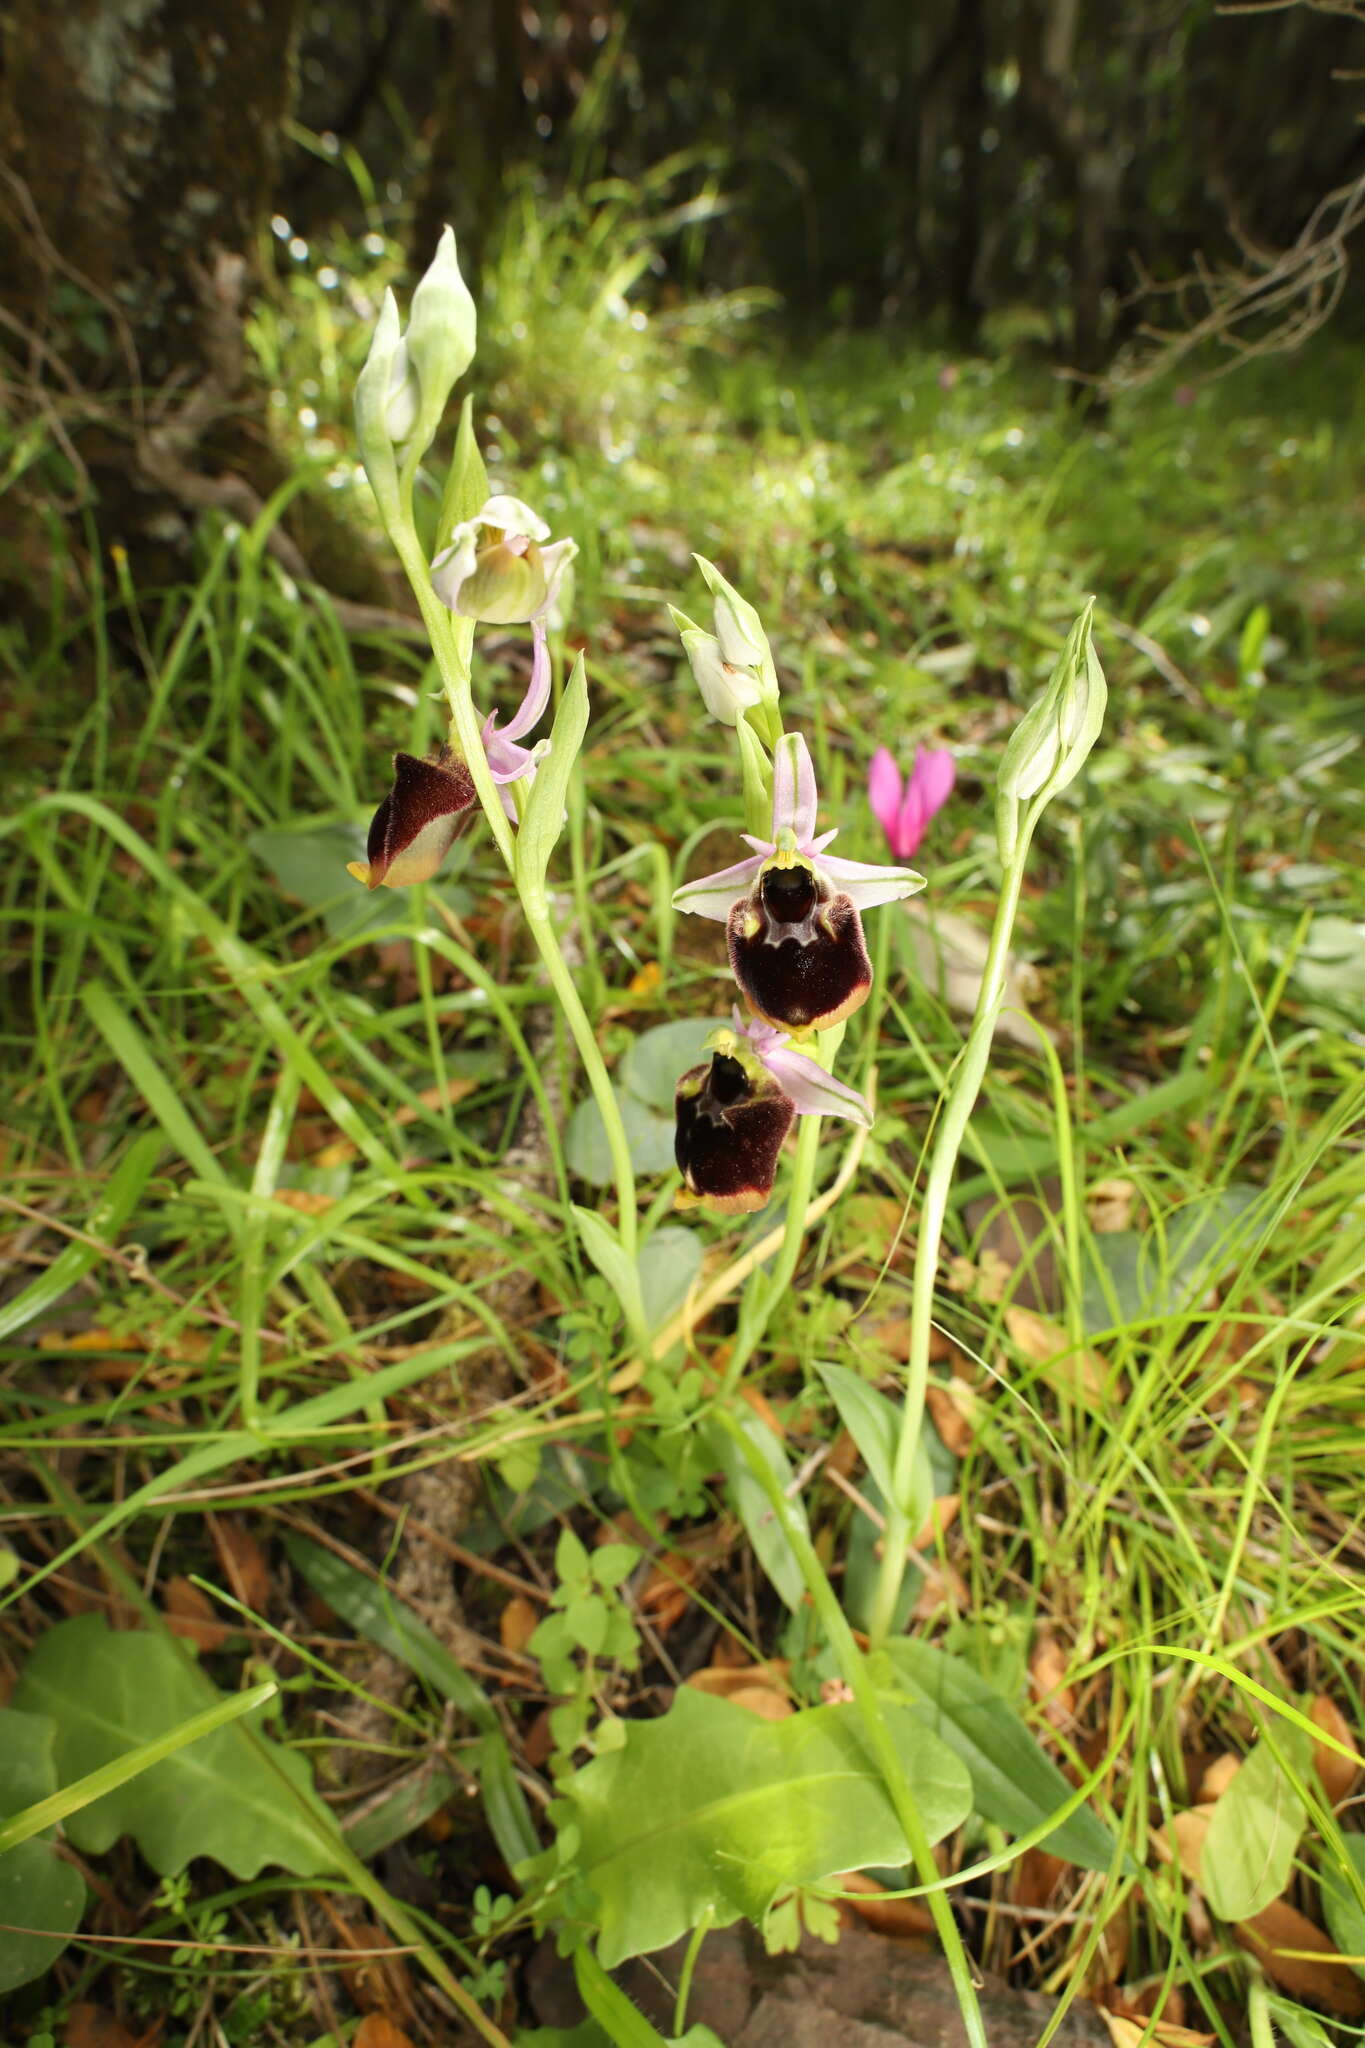 Image of Ophrys fuciflora subsp. chestermanii (J. J. Wood) H. Blatt & W. Wirth